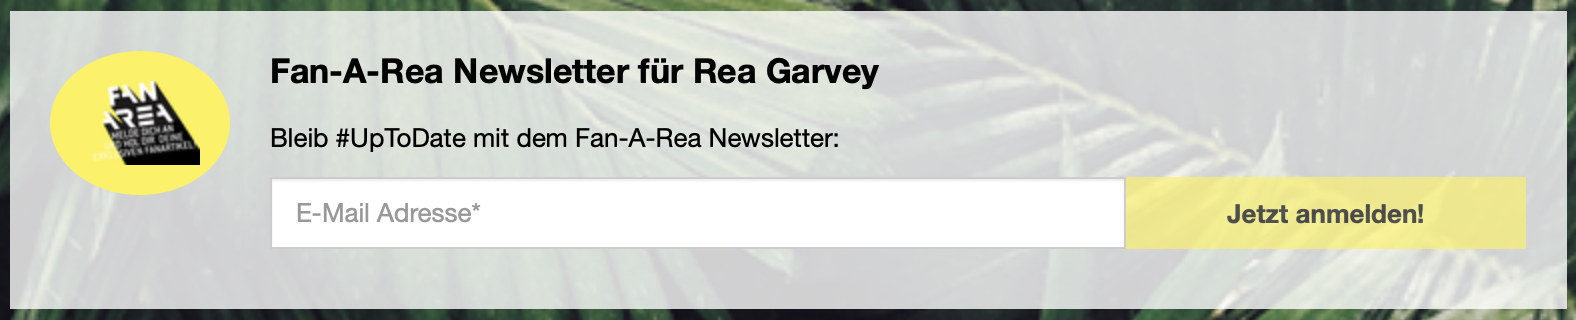 Rea Garvey Newsletteranmeldung